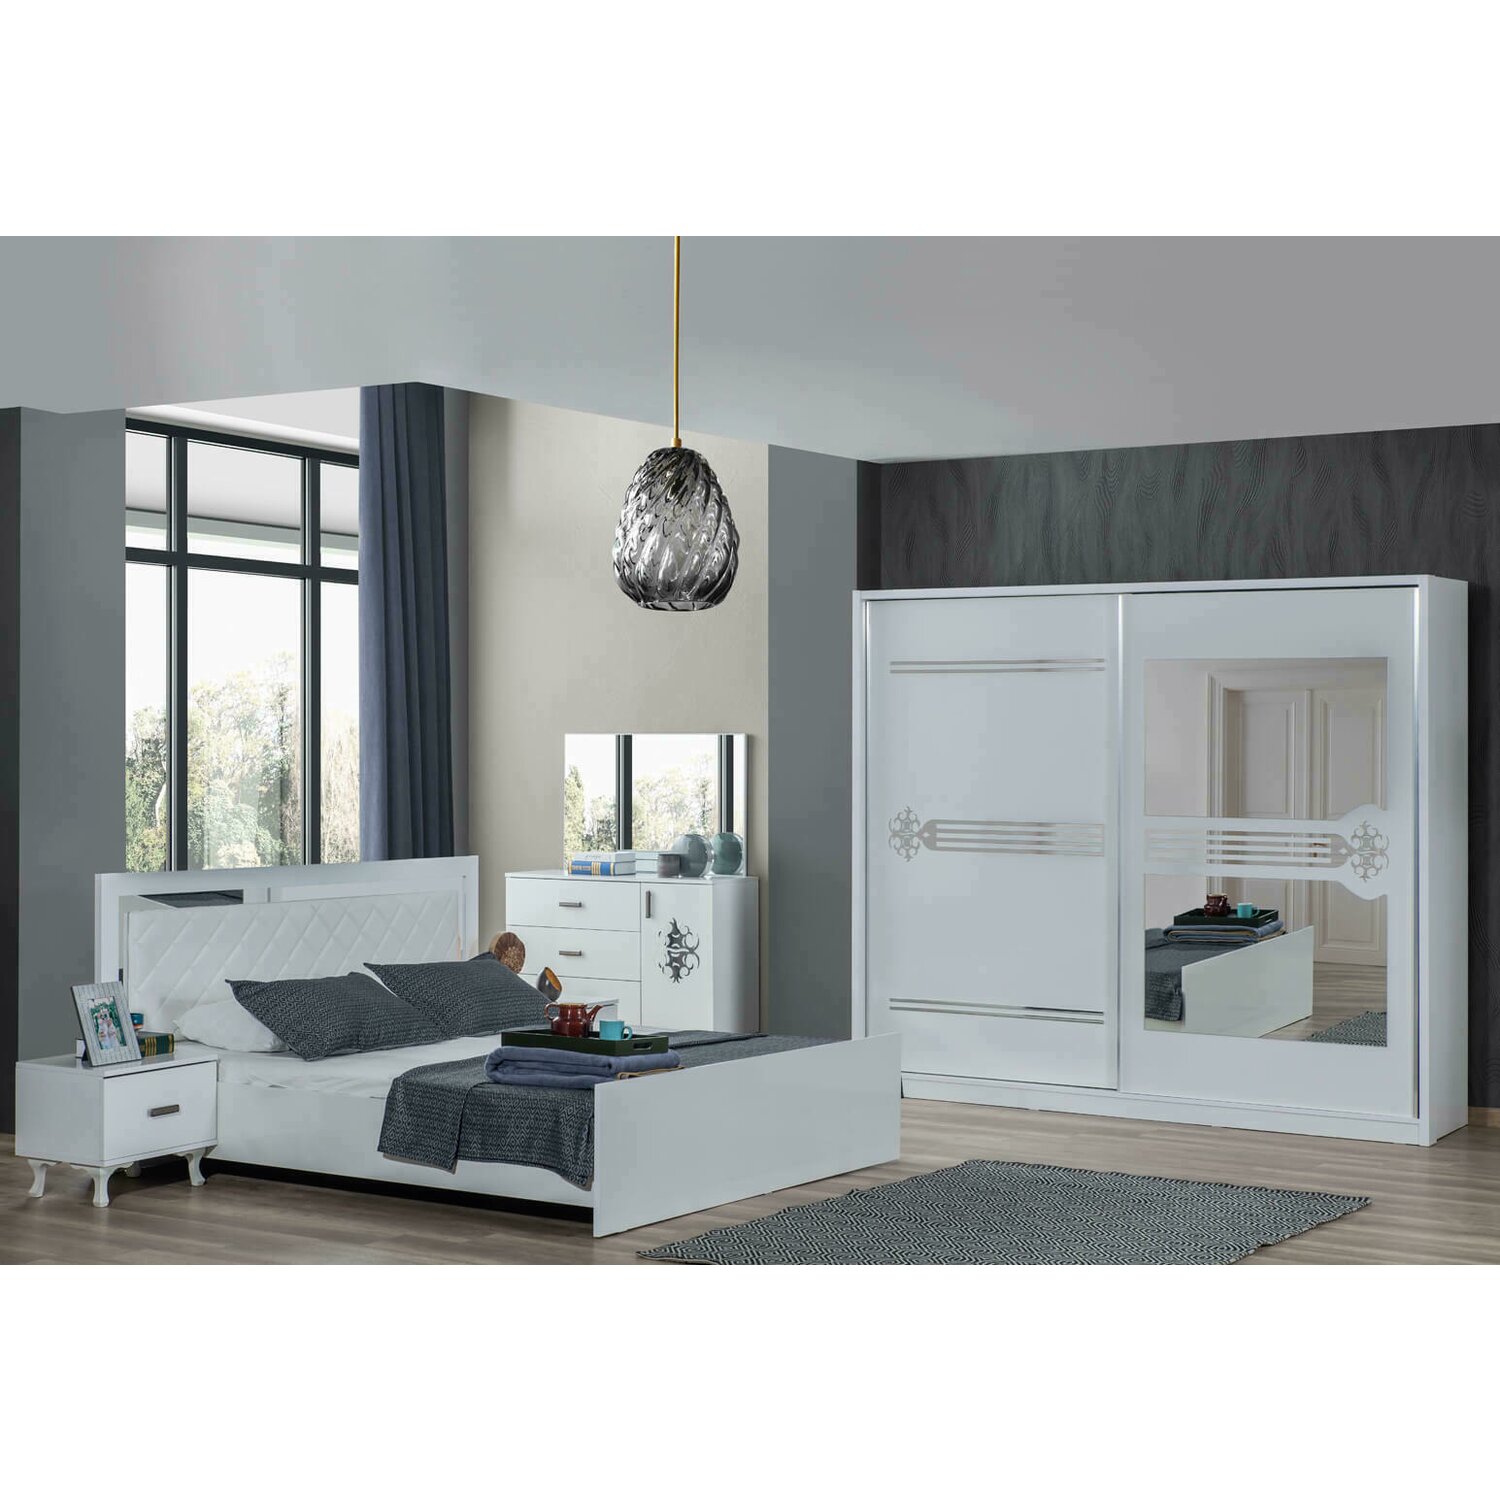 Dormitor Modern Alanya Alb - Dulap 2 Usi Glisante, pat 160x200, Comoda cu Sertare, Toaleta si 2 noptiere